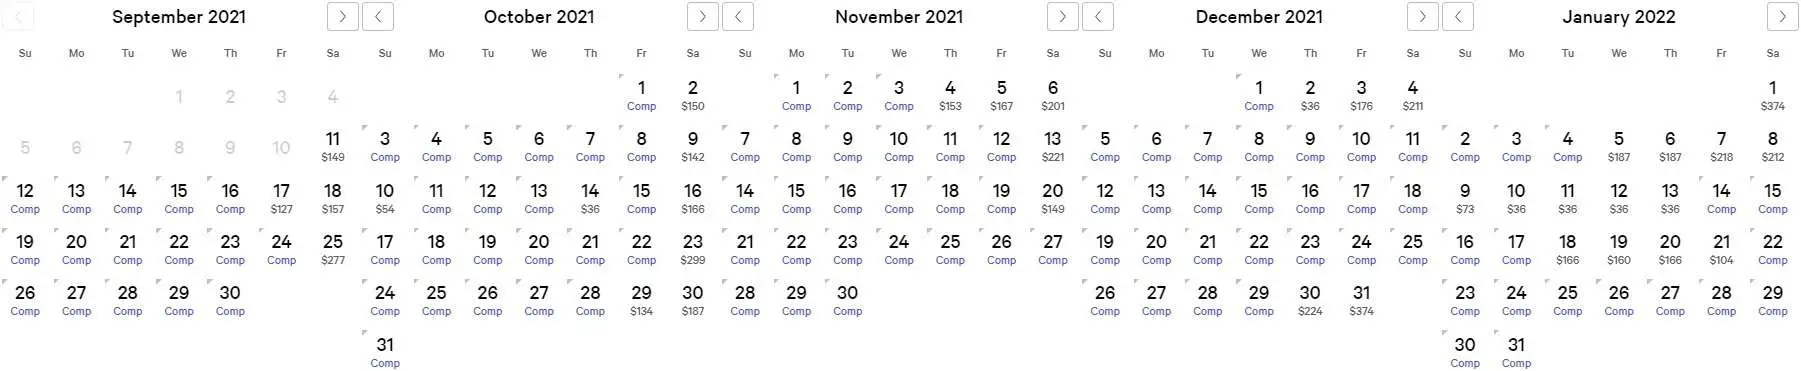 Myvegas Rewards Calendar 2022 Myvegas One Complimentary Room Night Calendars 2021 (Up To Jan. 2022) -  Myvegasadvisor